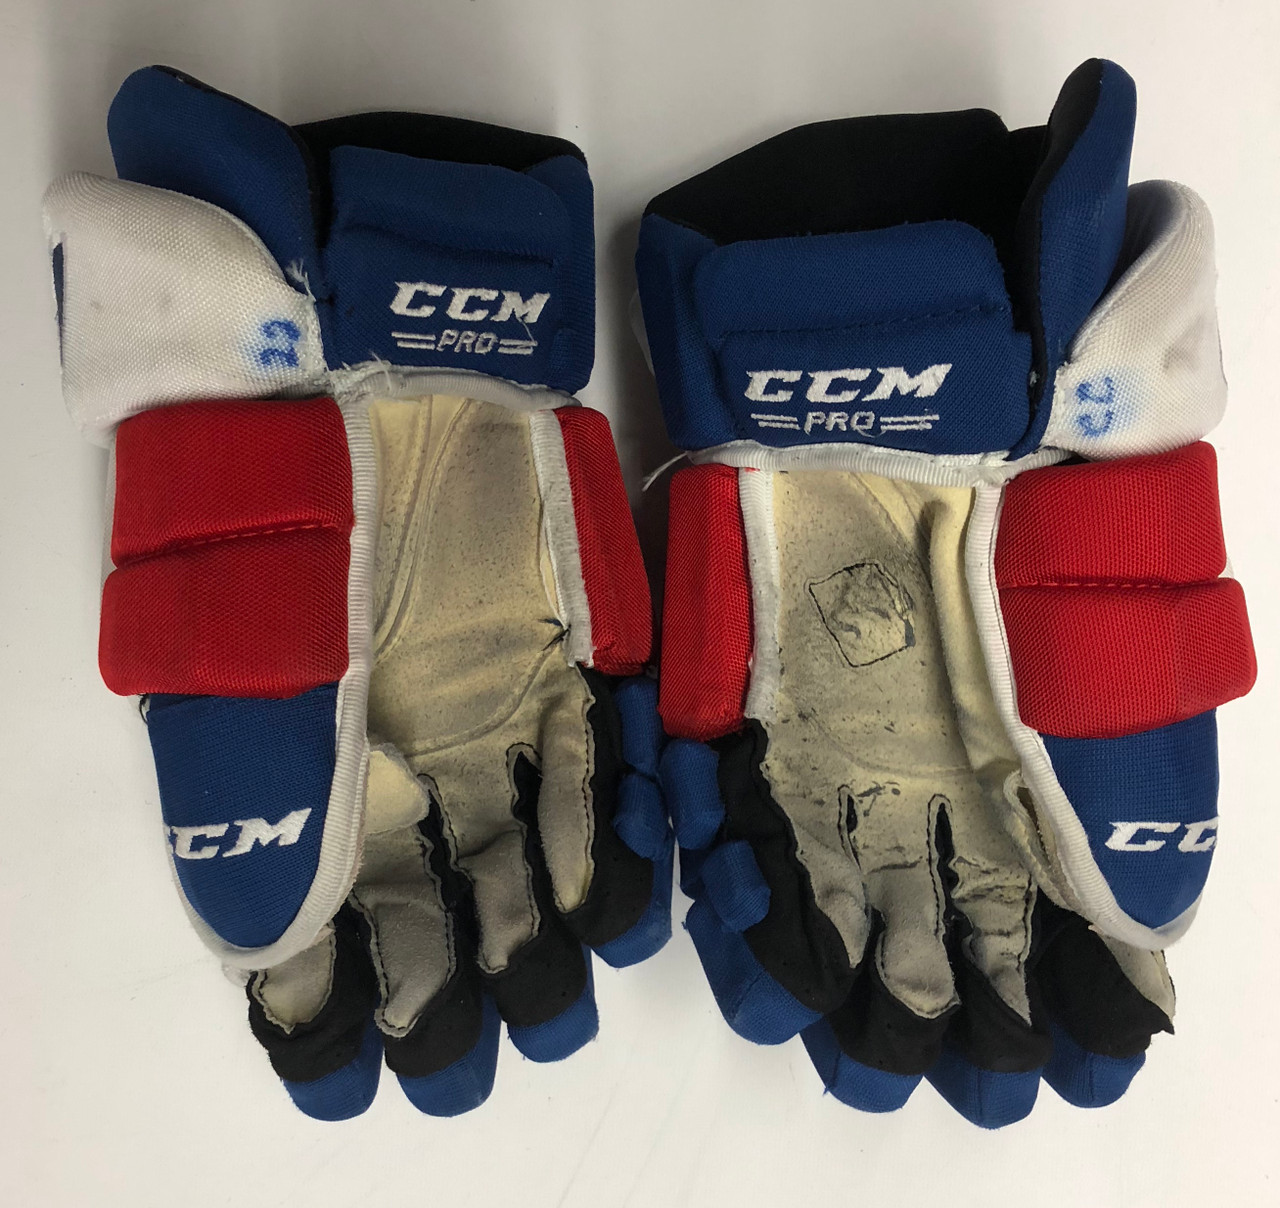 Warrior AX1 Pro Stock Custom Hockey Gloves 14 New York Rangers HOLDEN used  NHL (5) - DK's Hockey Shop